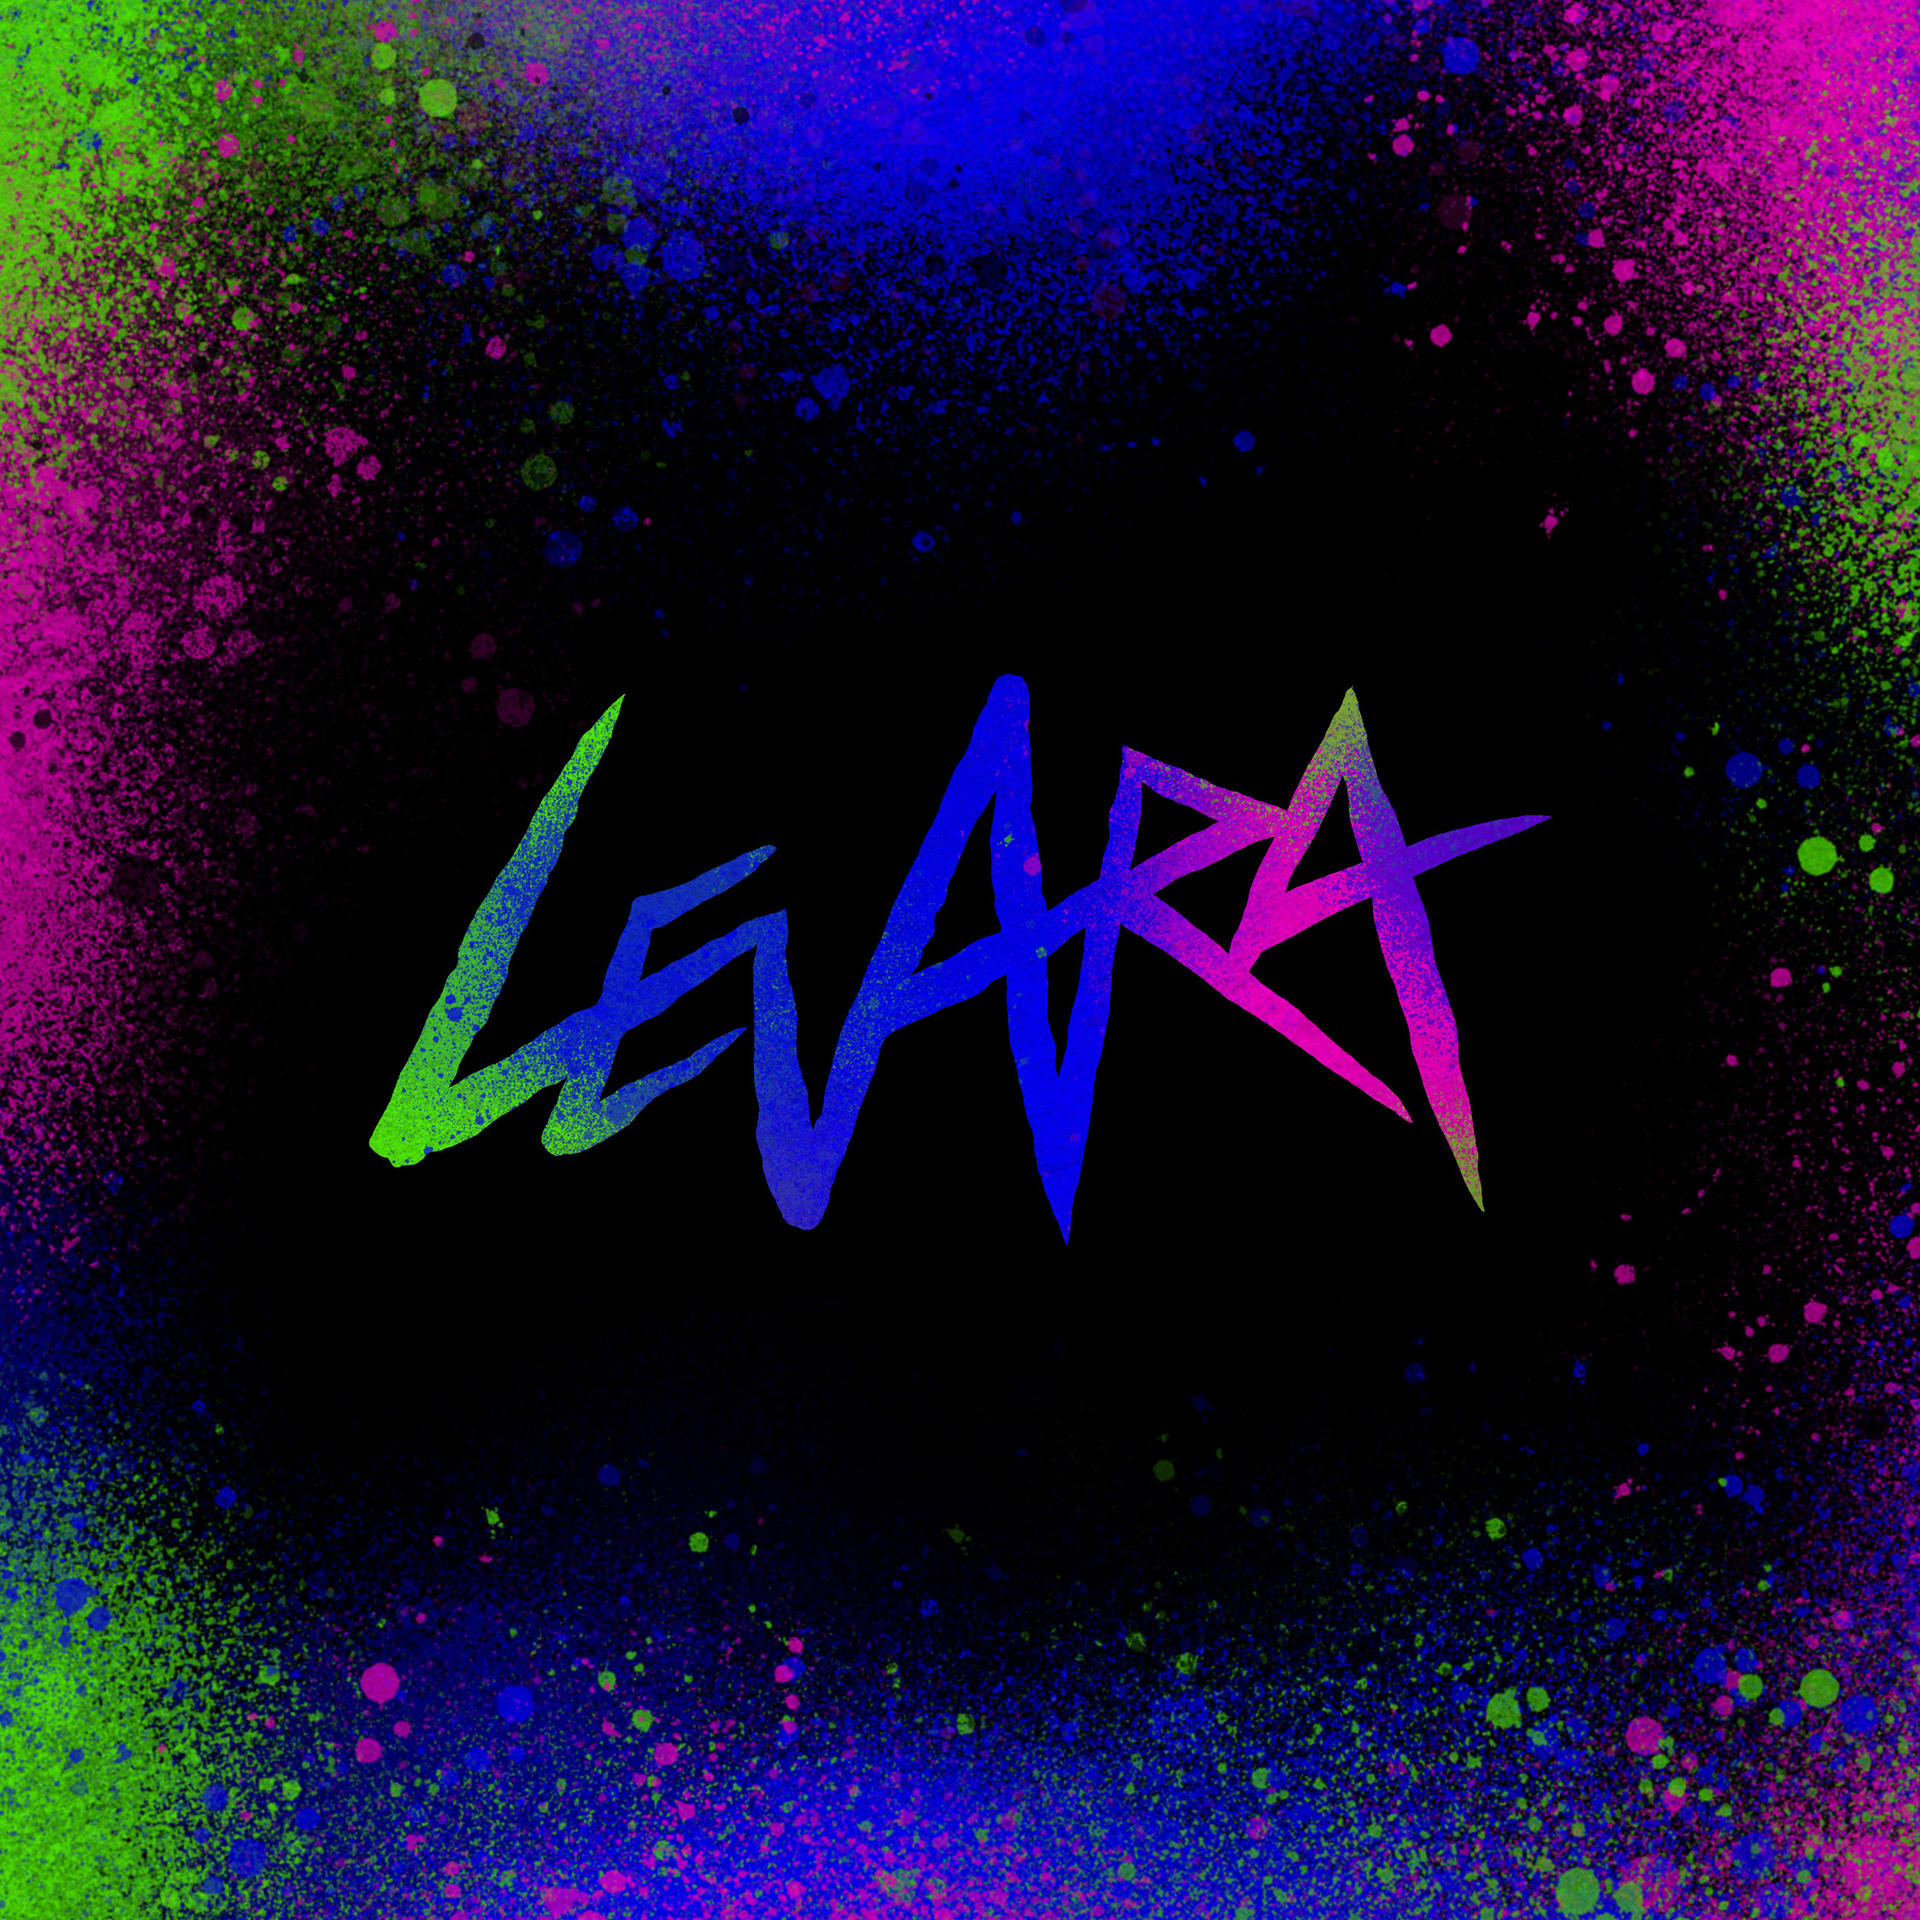 Levara - LEVARA (LTD.180 GR.BLUE VINYL) - (Vinyl)